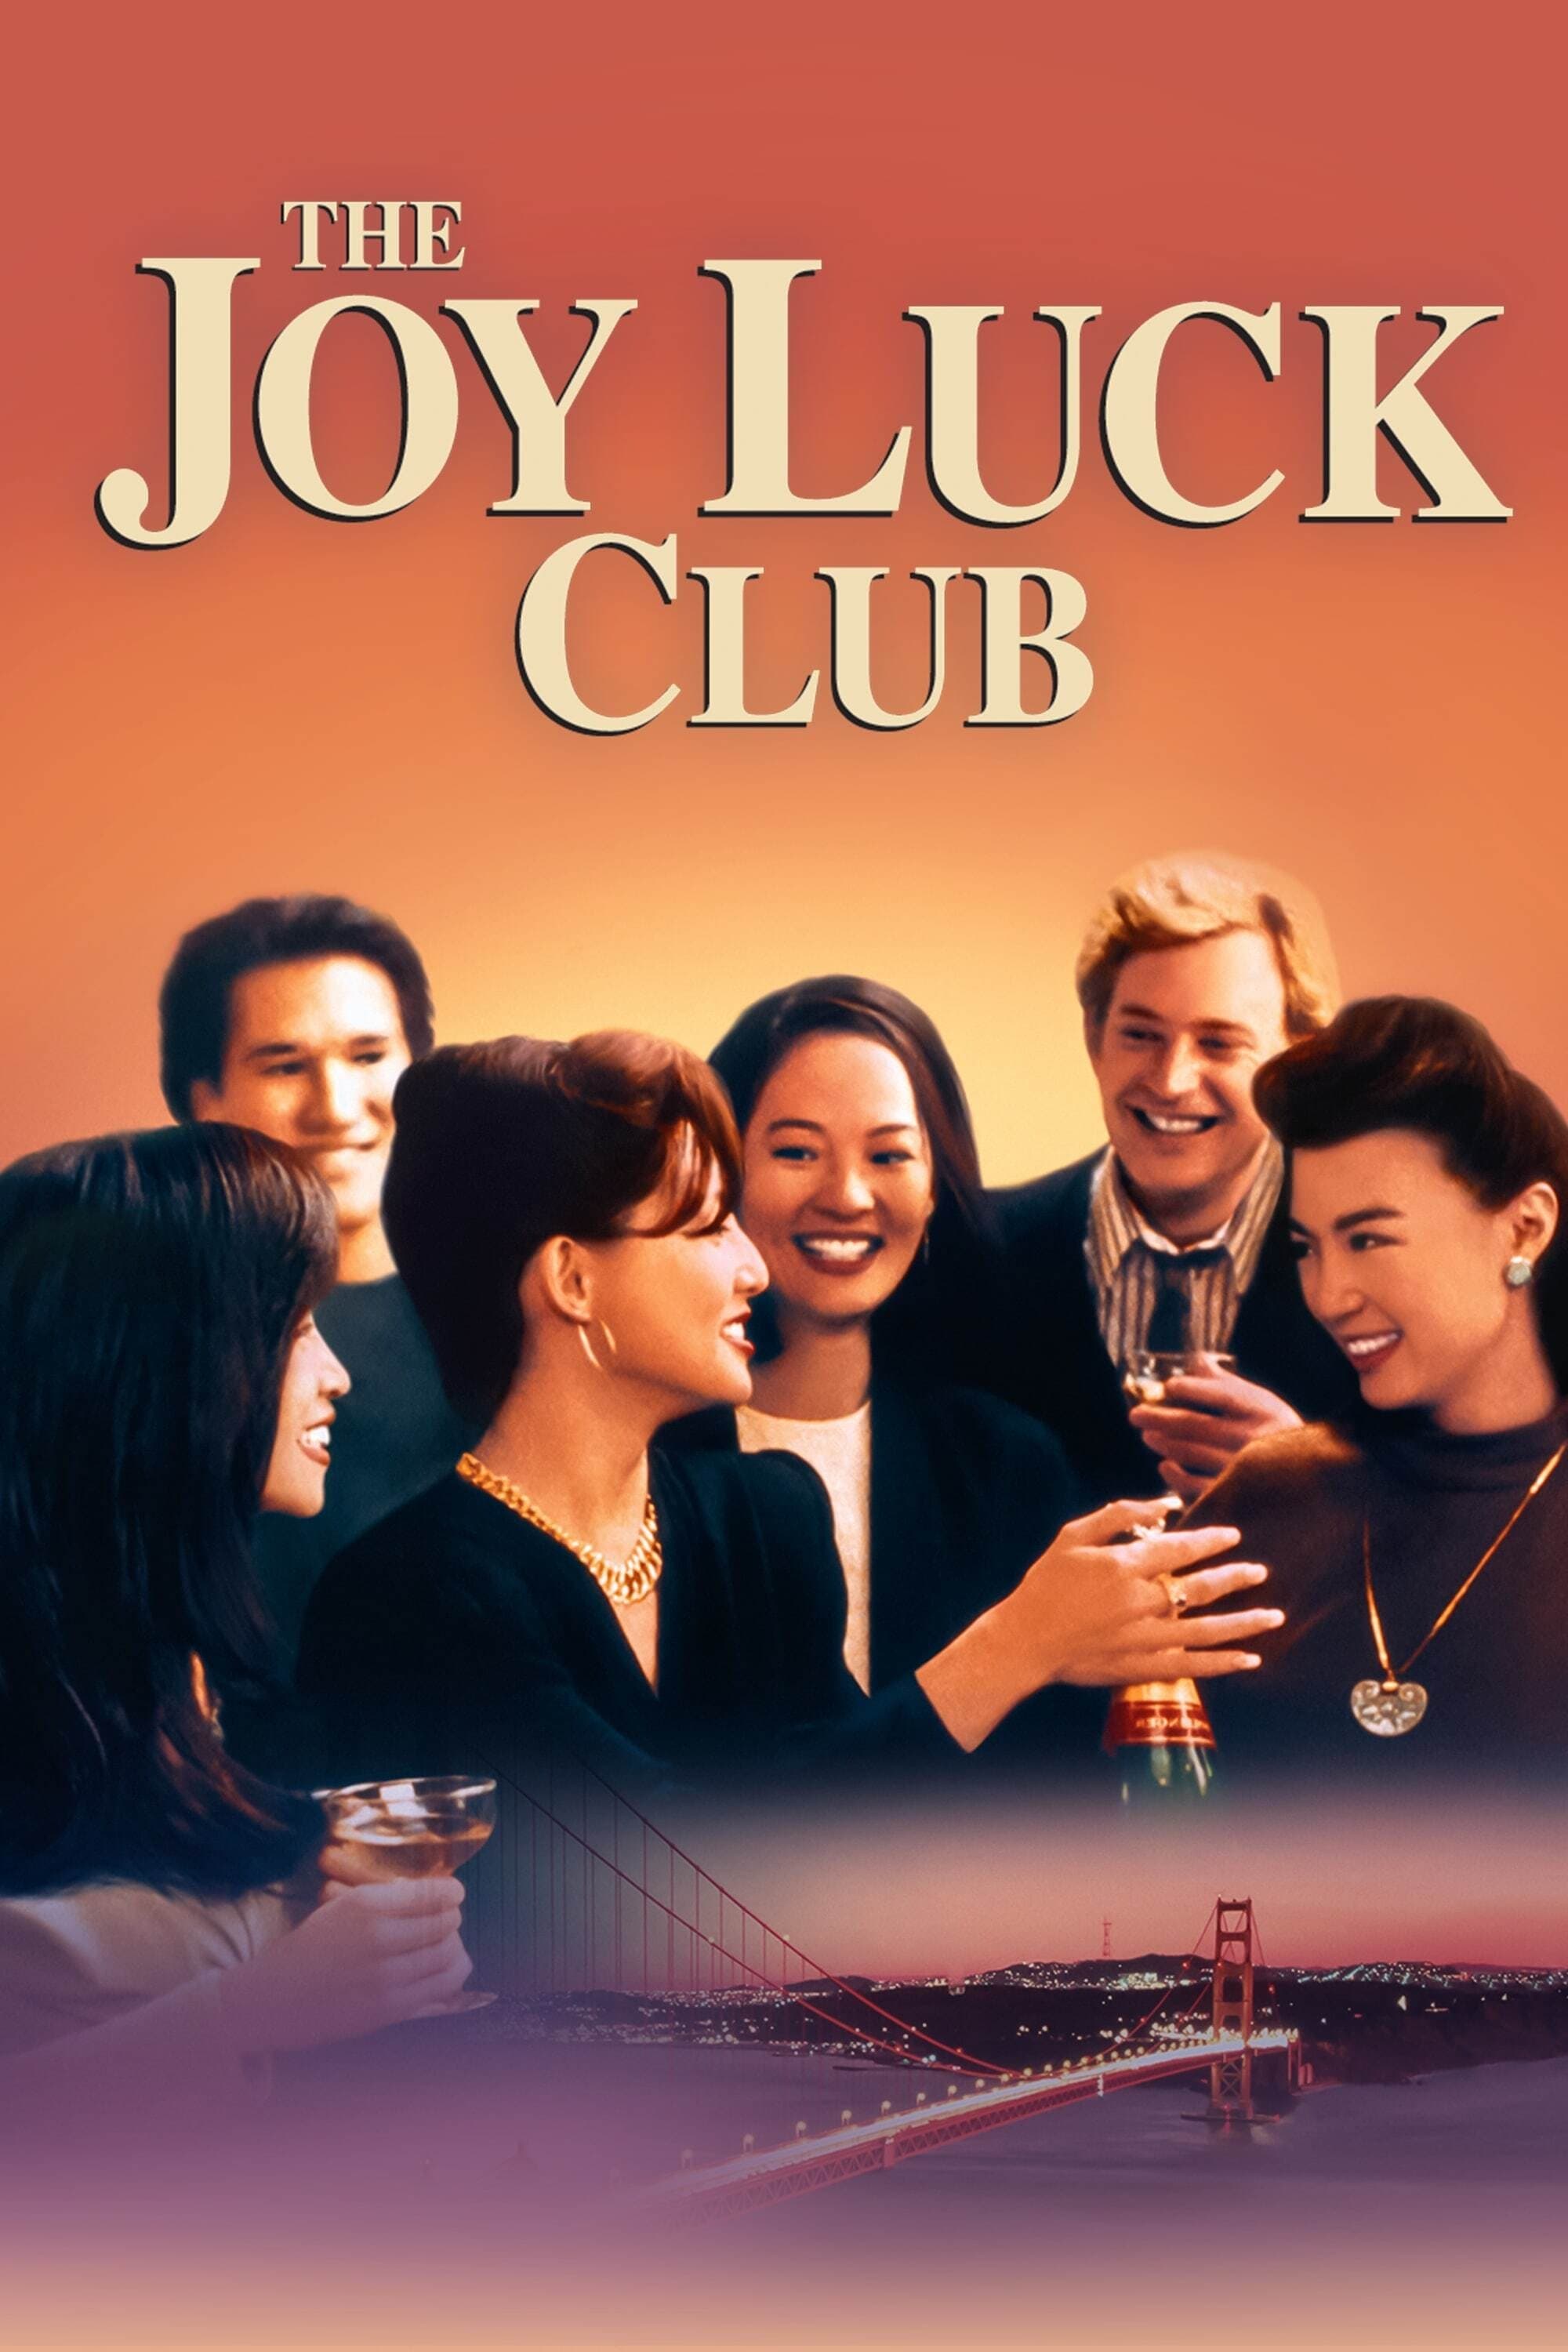 Watch The Joy Luck Club (1993) Full Movie Online - Plex